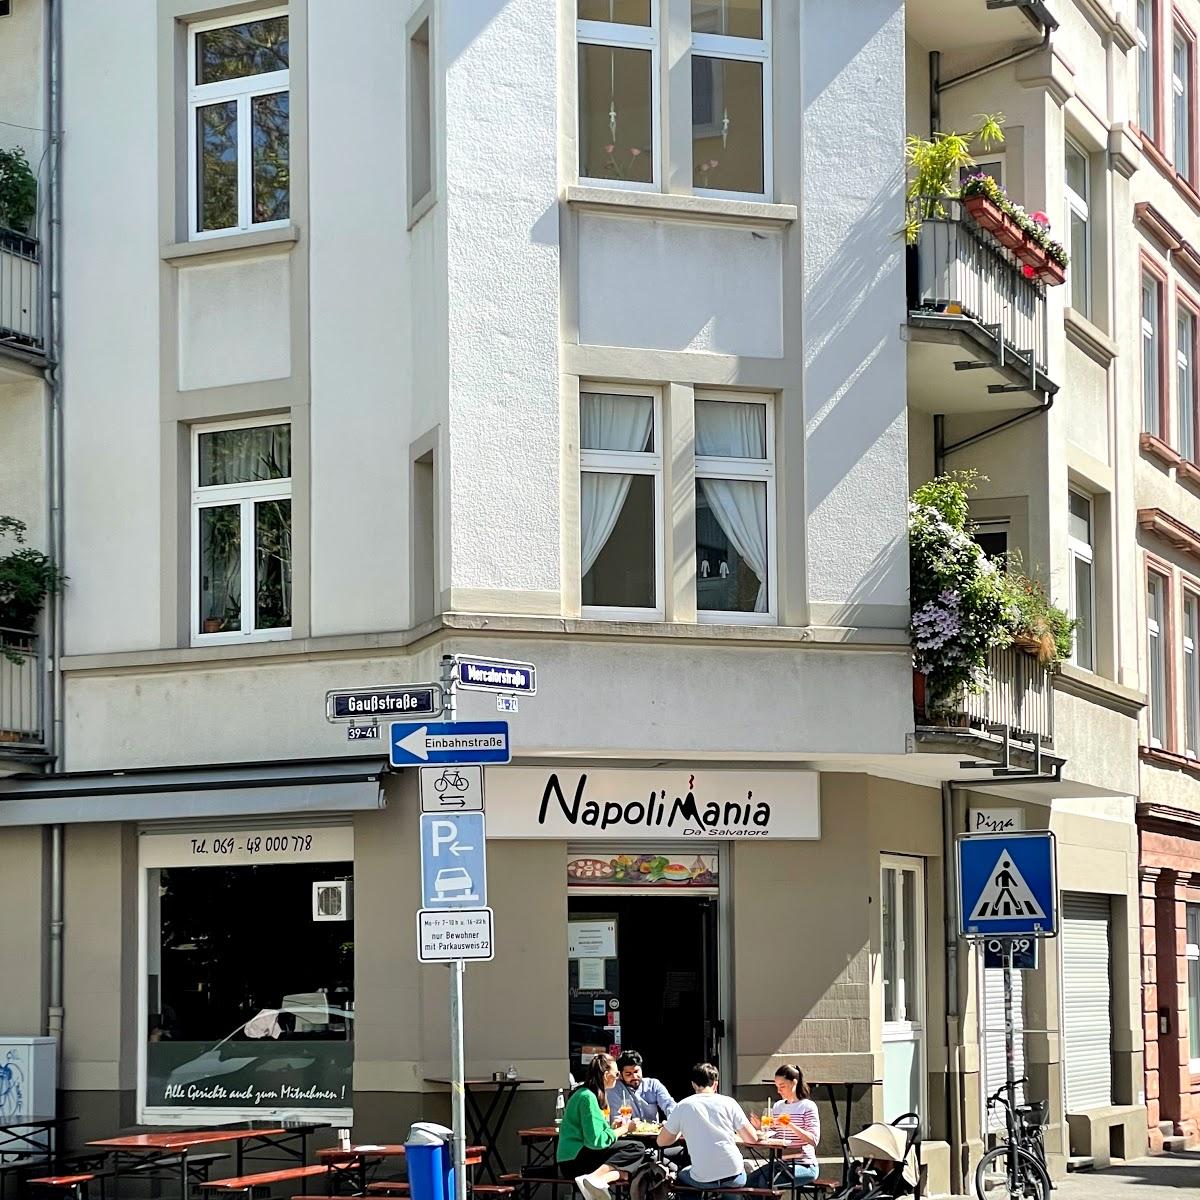 Restaurant "Napolimania Da Salvatore" in Frankfurt am Main